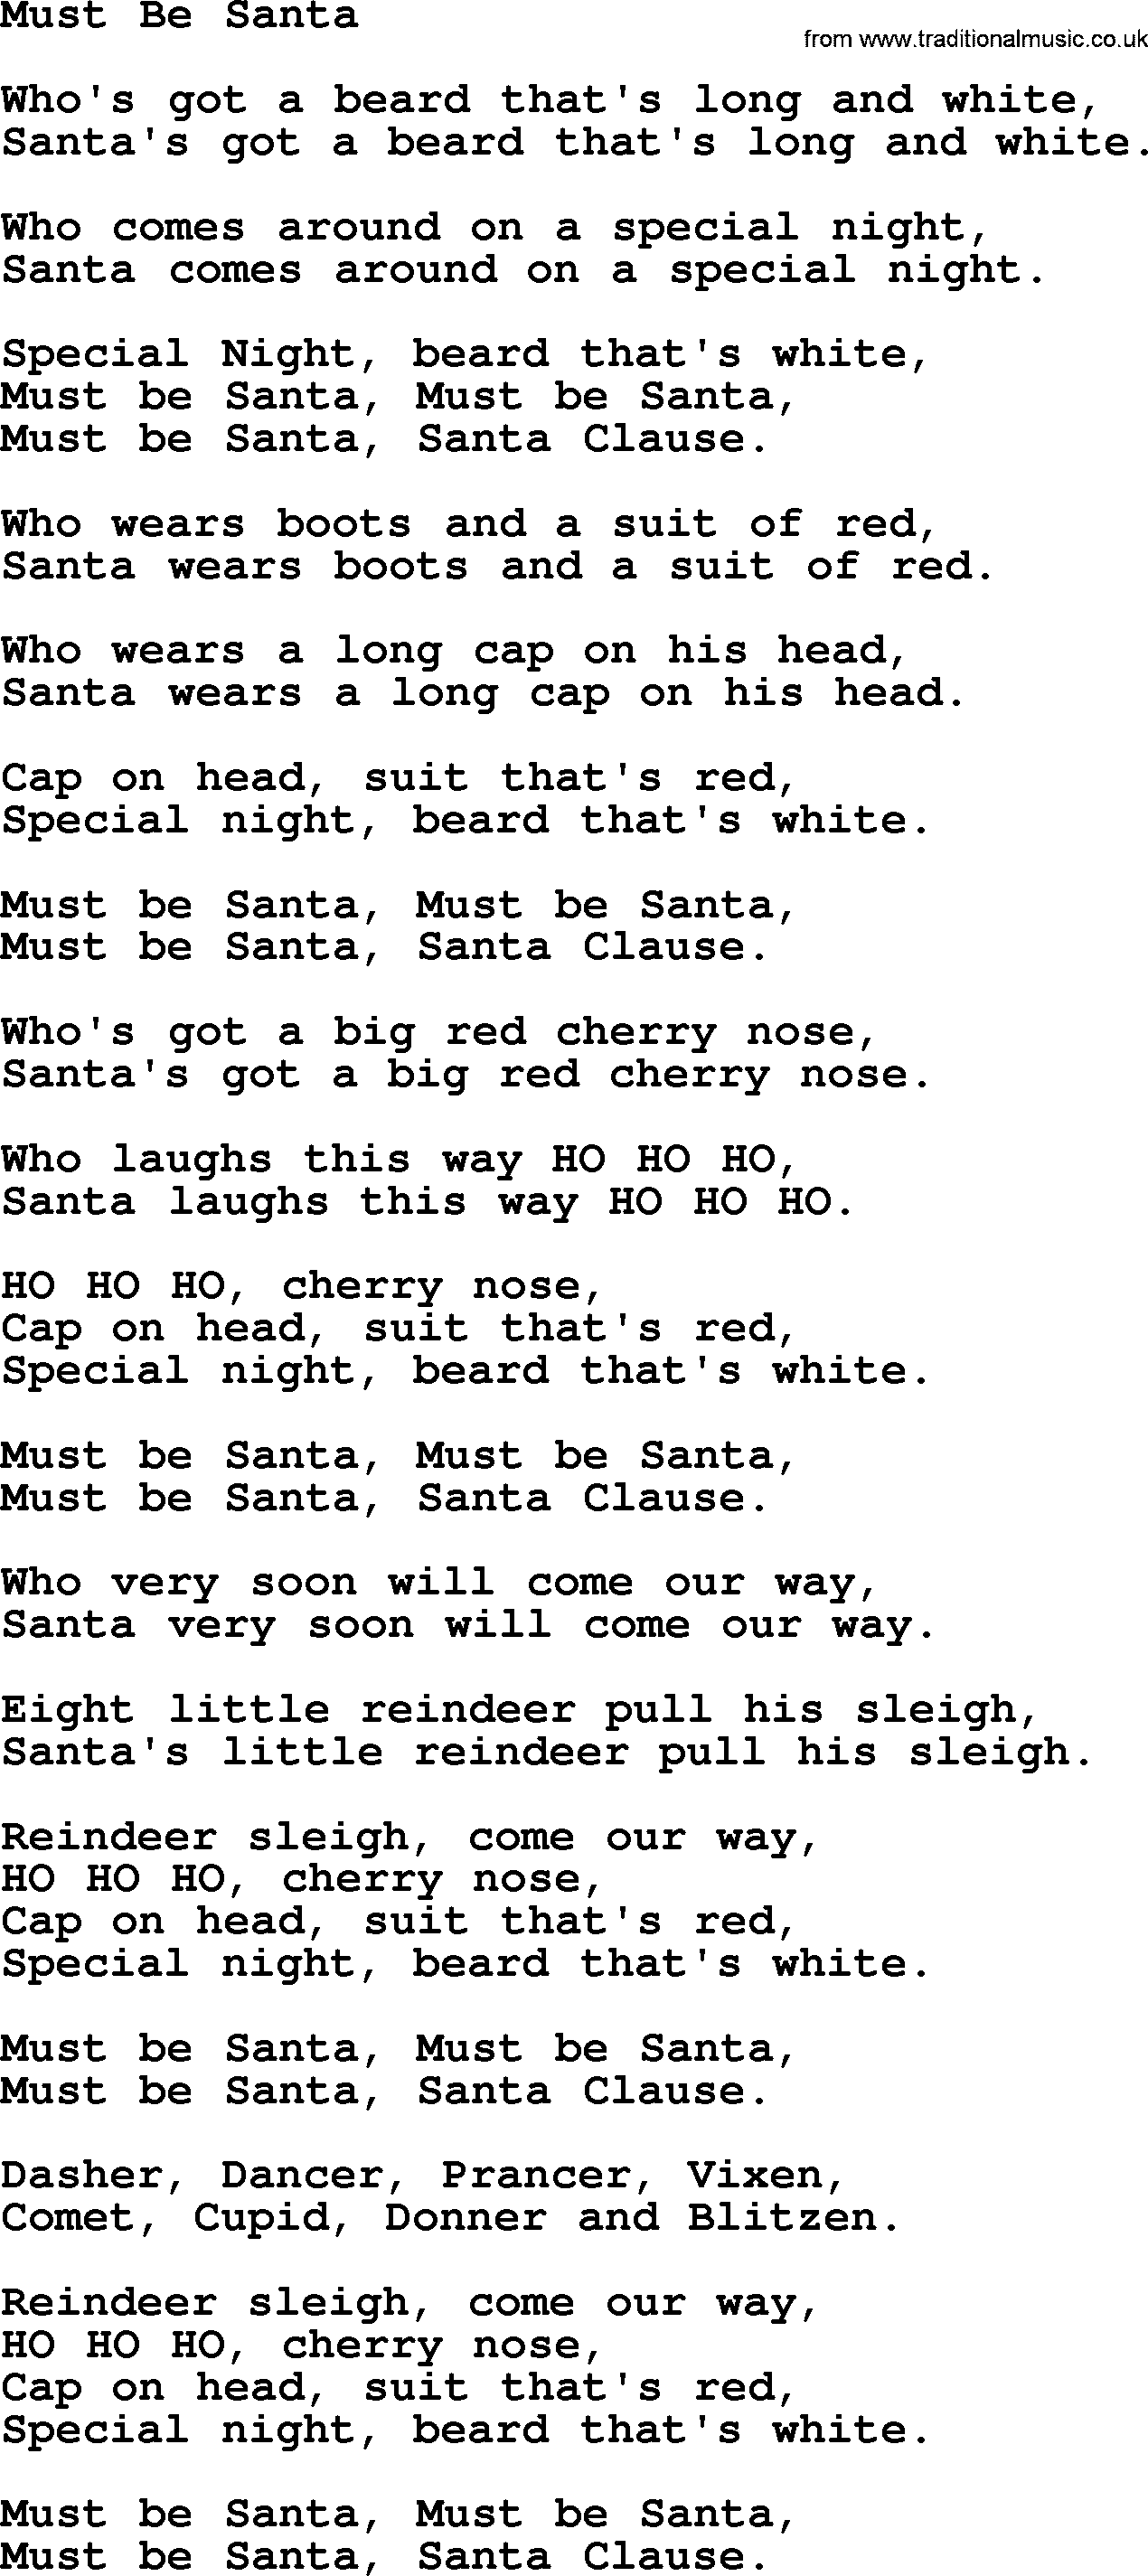 Catholic Hymns, Song: Must Be Santa - lyrics and PDF